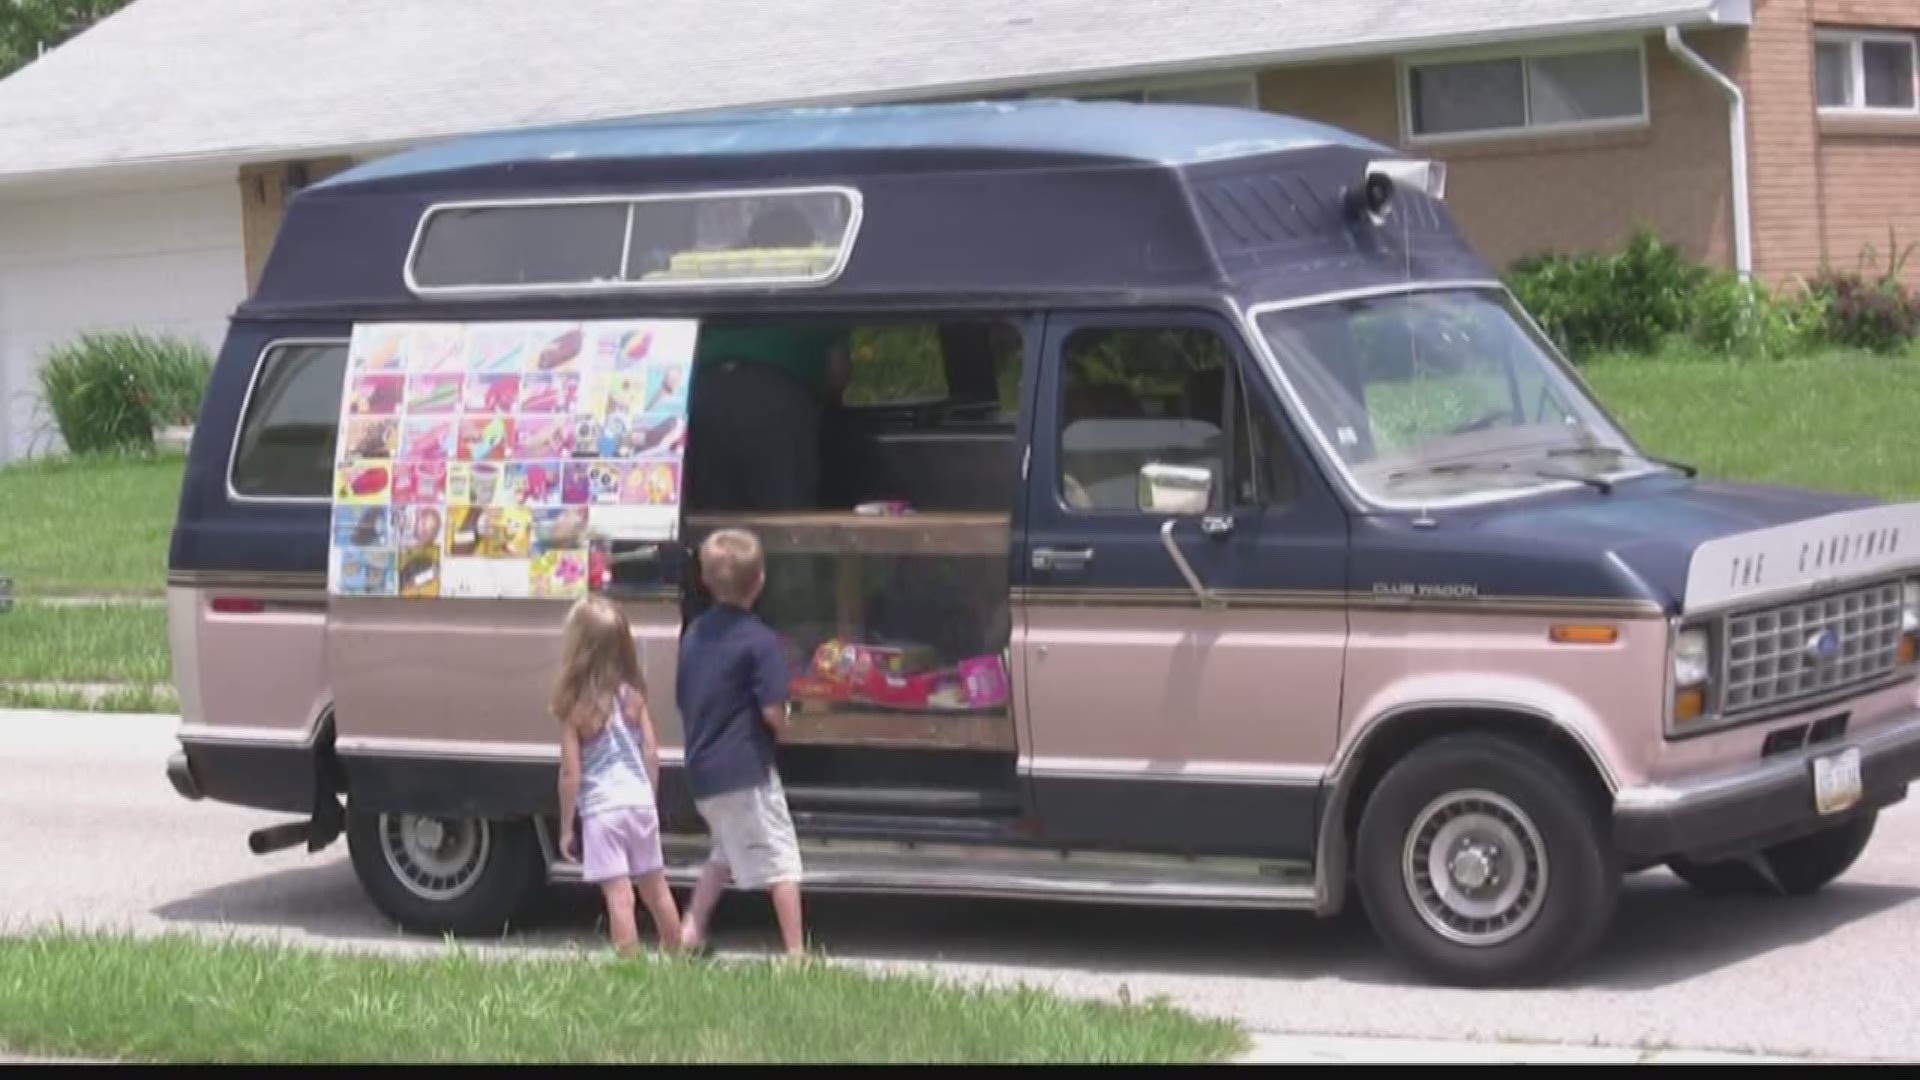 SPD urges parents to keep an eye on children at ice cream trucks